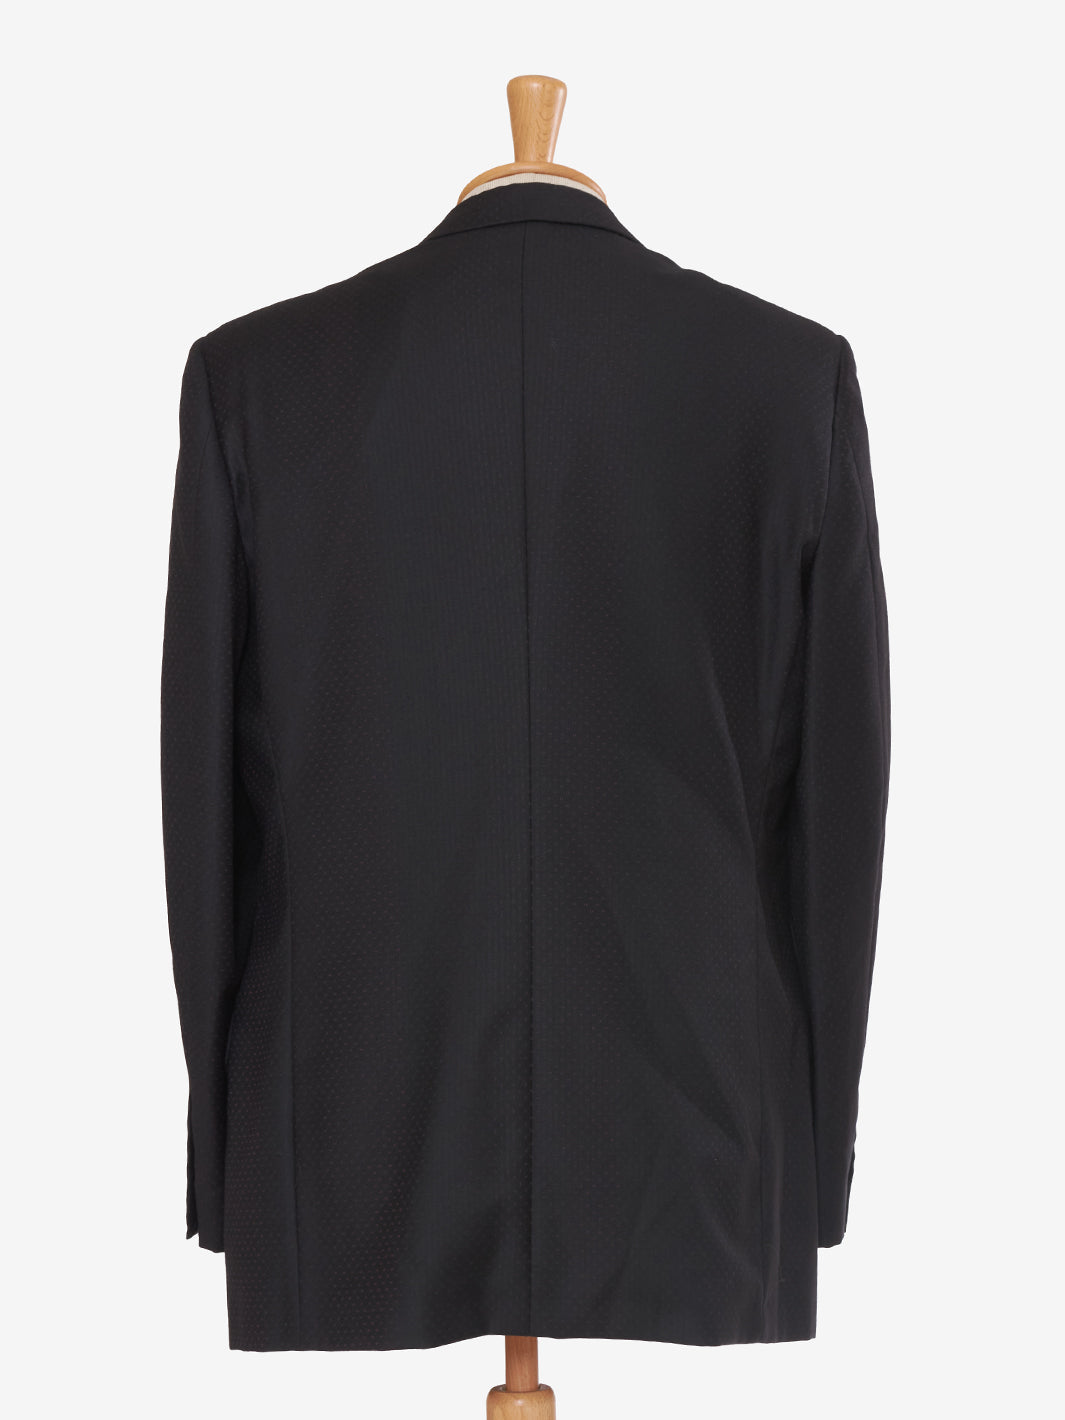 Gianni Versace Black suit in cool wool